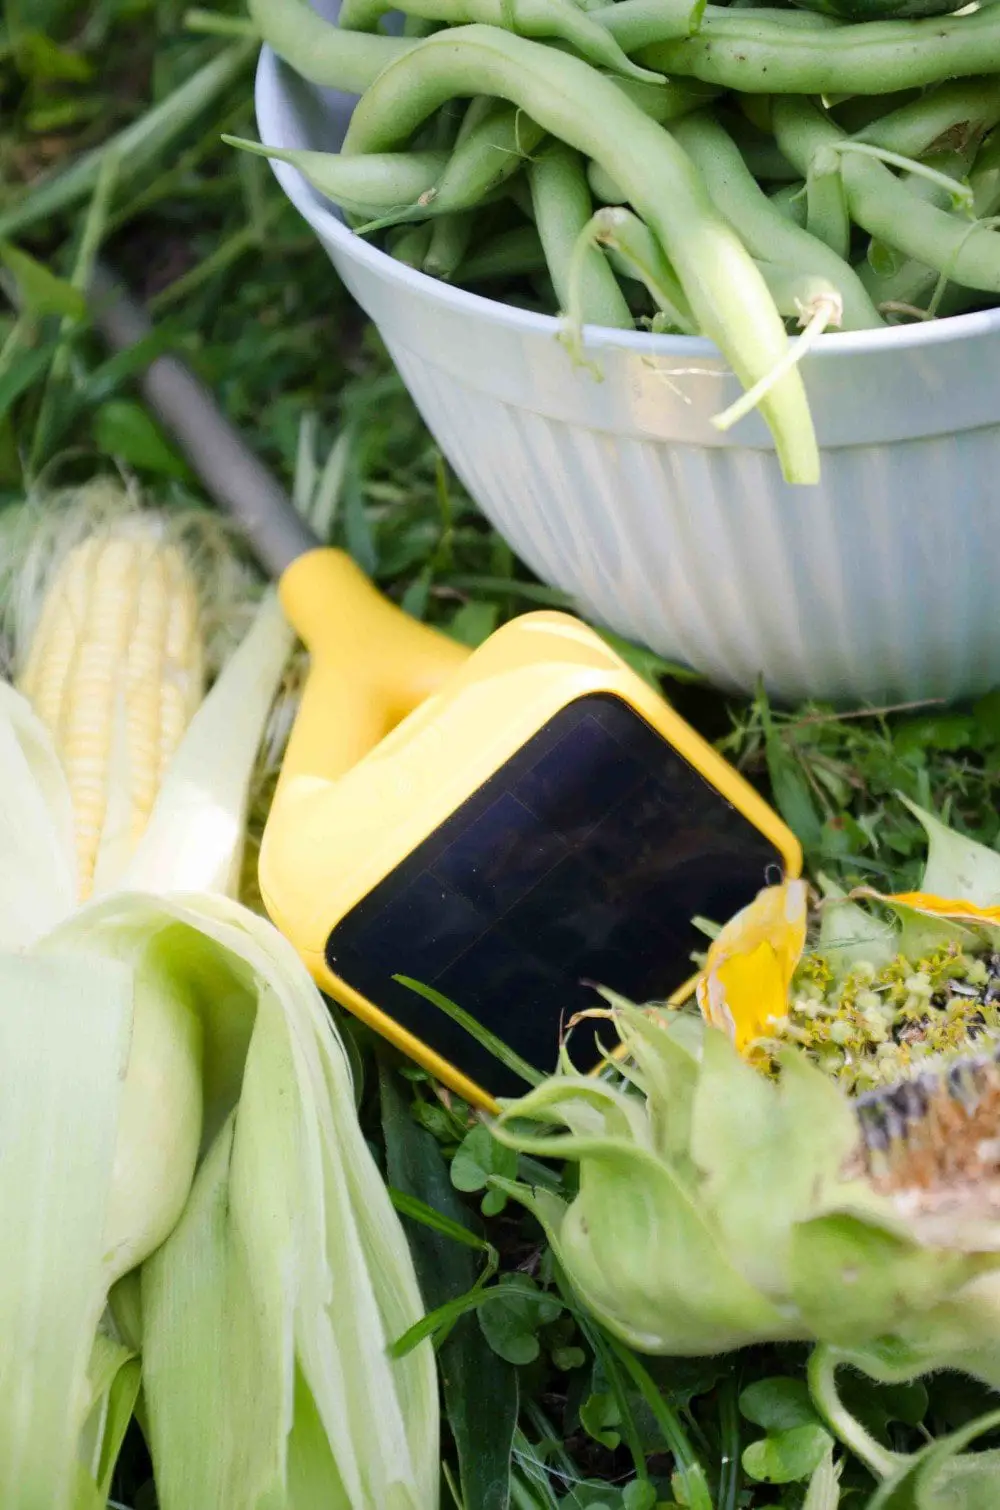 Edyn garden sensor technology that will change the way you work in the garden.